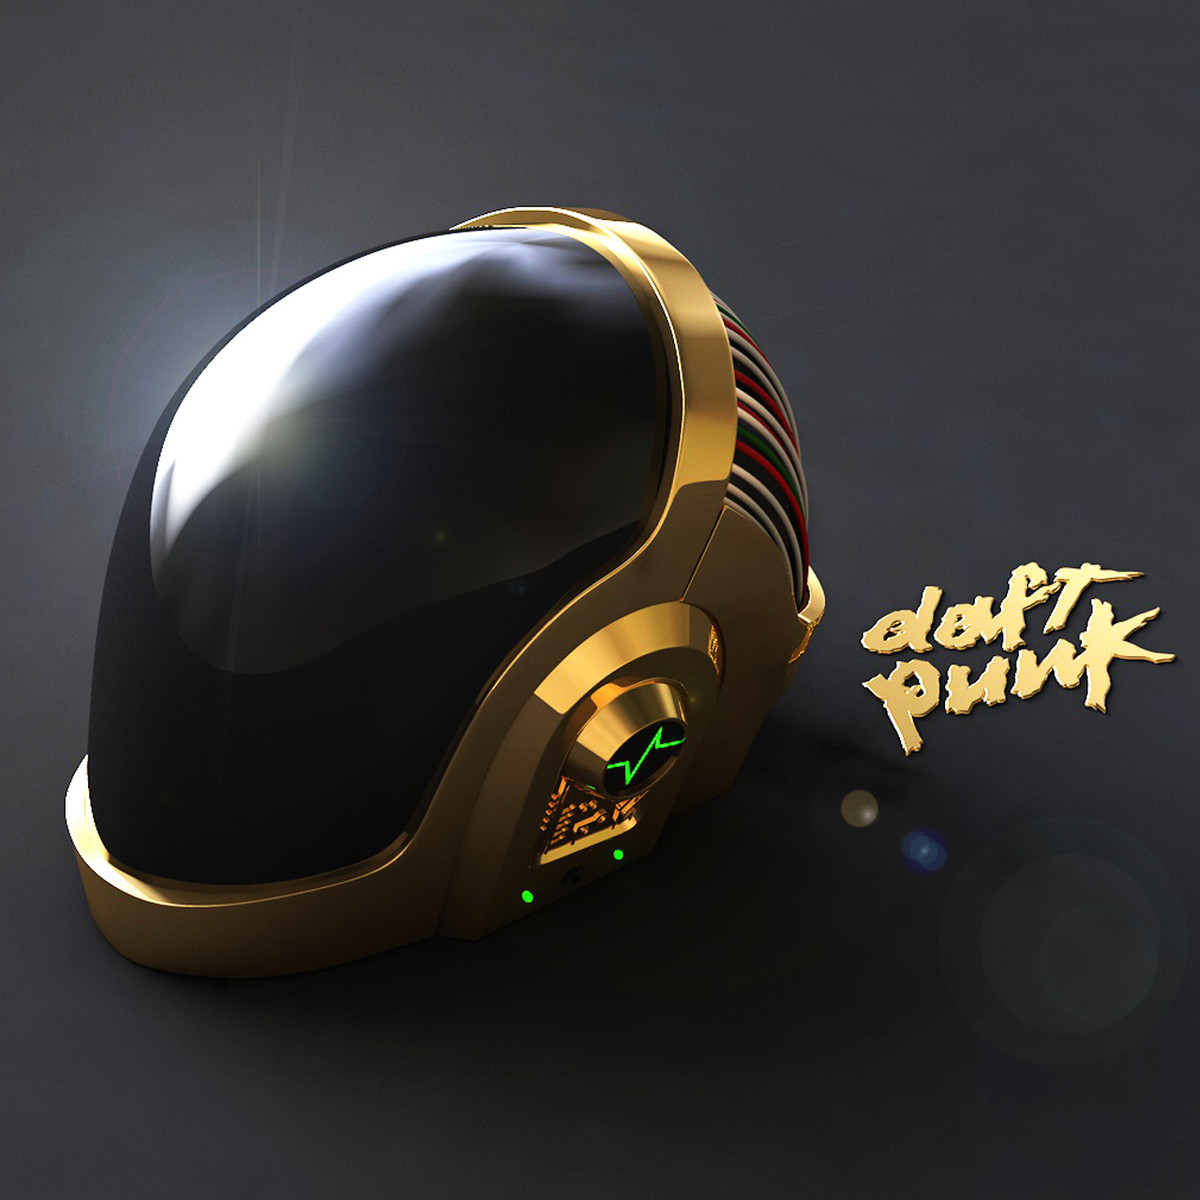 Cinema4d Daft Punk Guy Helmet.